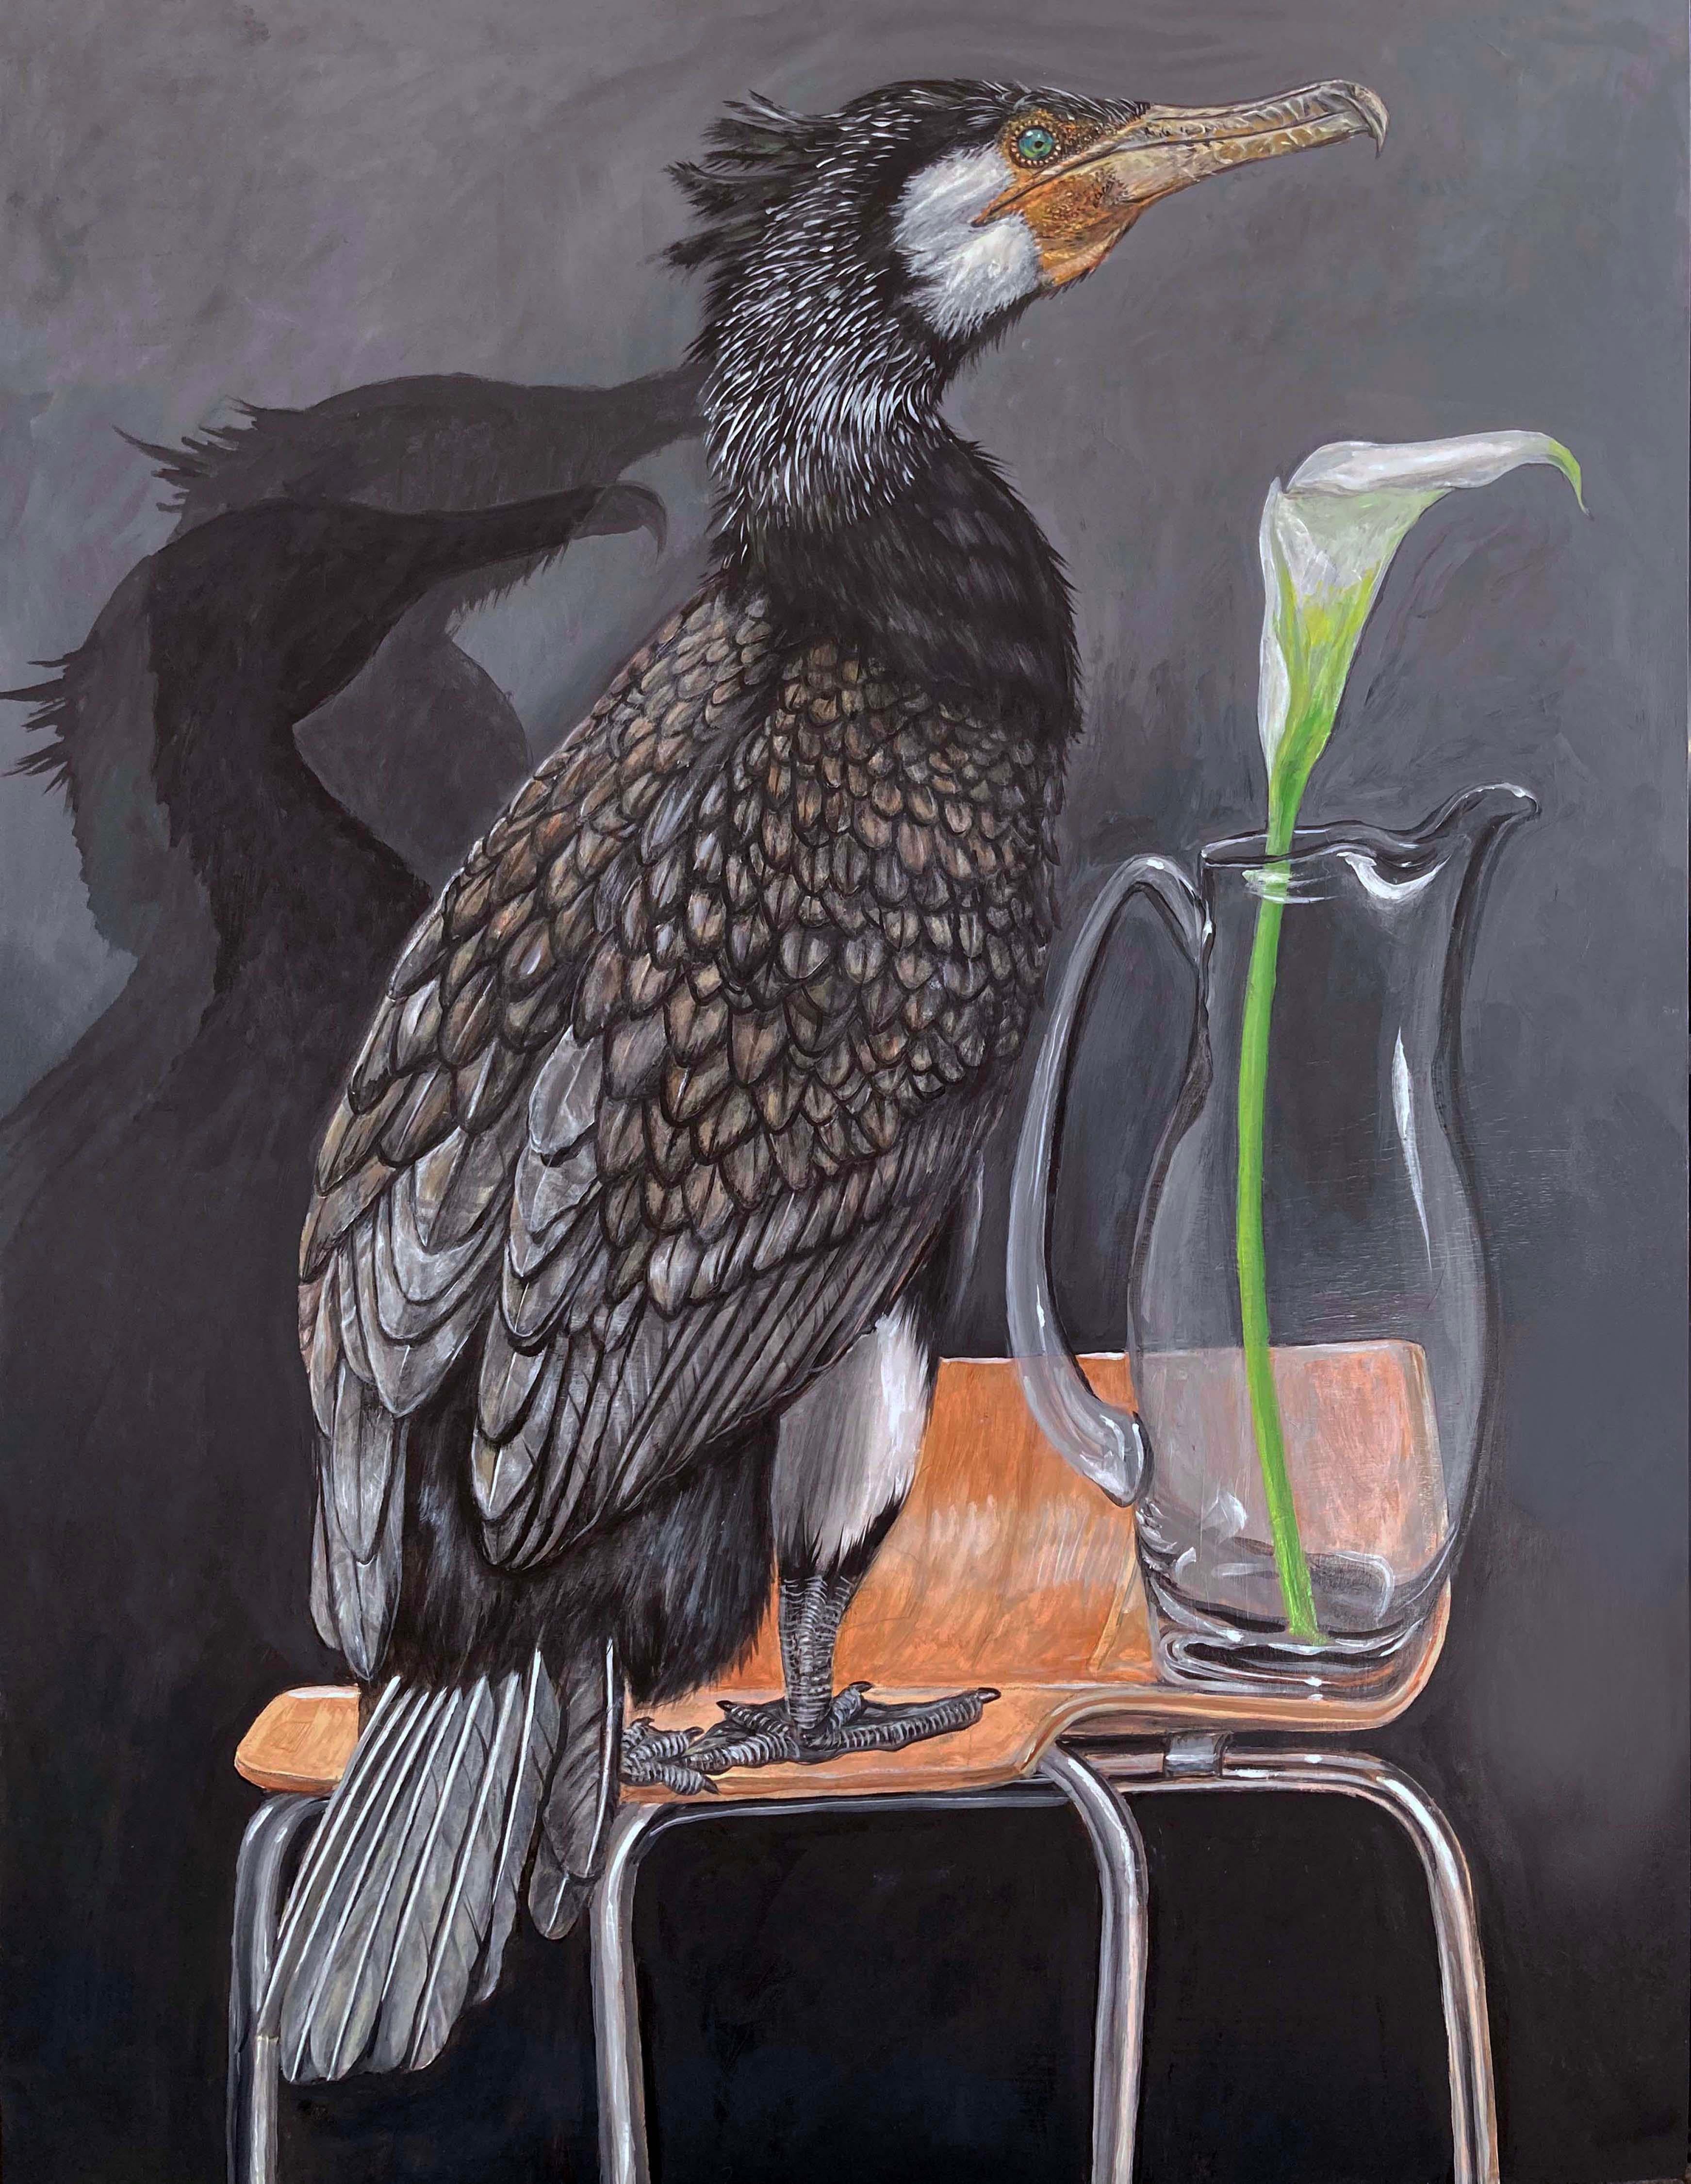 Thomas Broadbent Animal Painting - "Great Cormorant on Chair" contemporary surrealist animal oil painting, bird lil